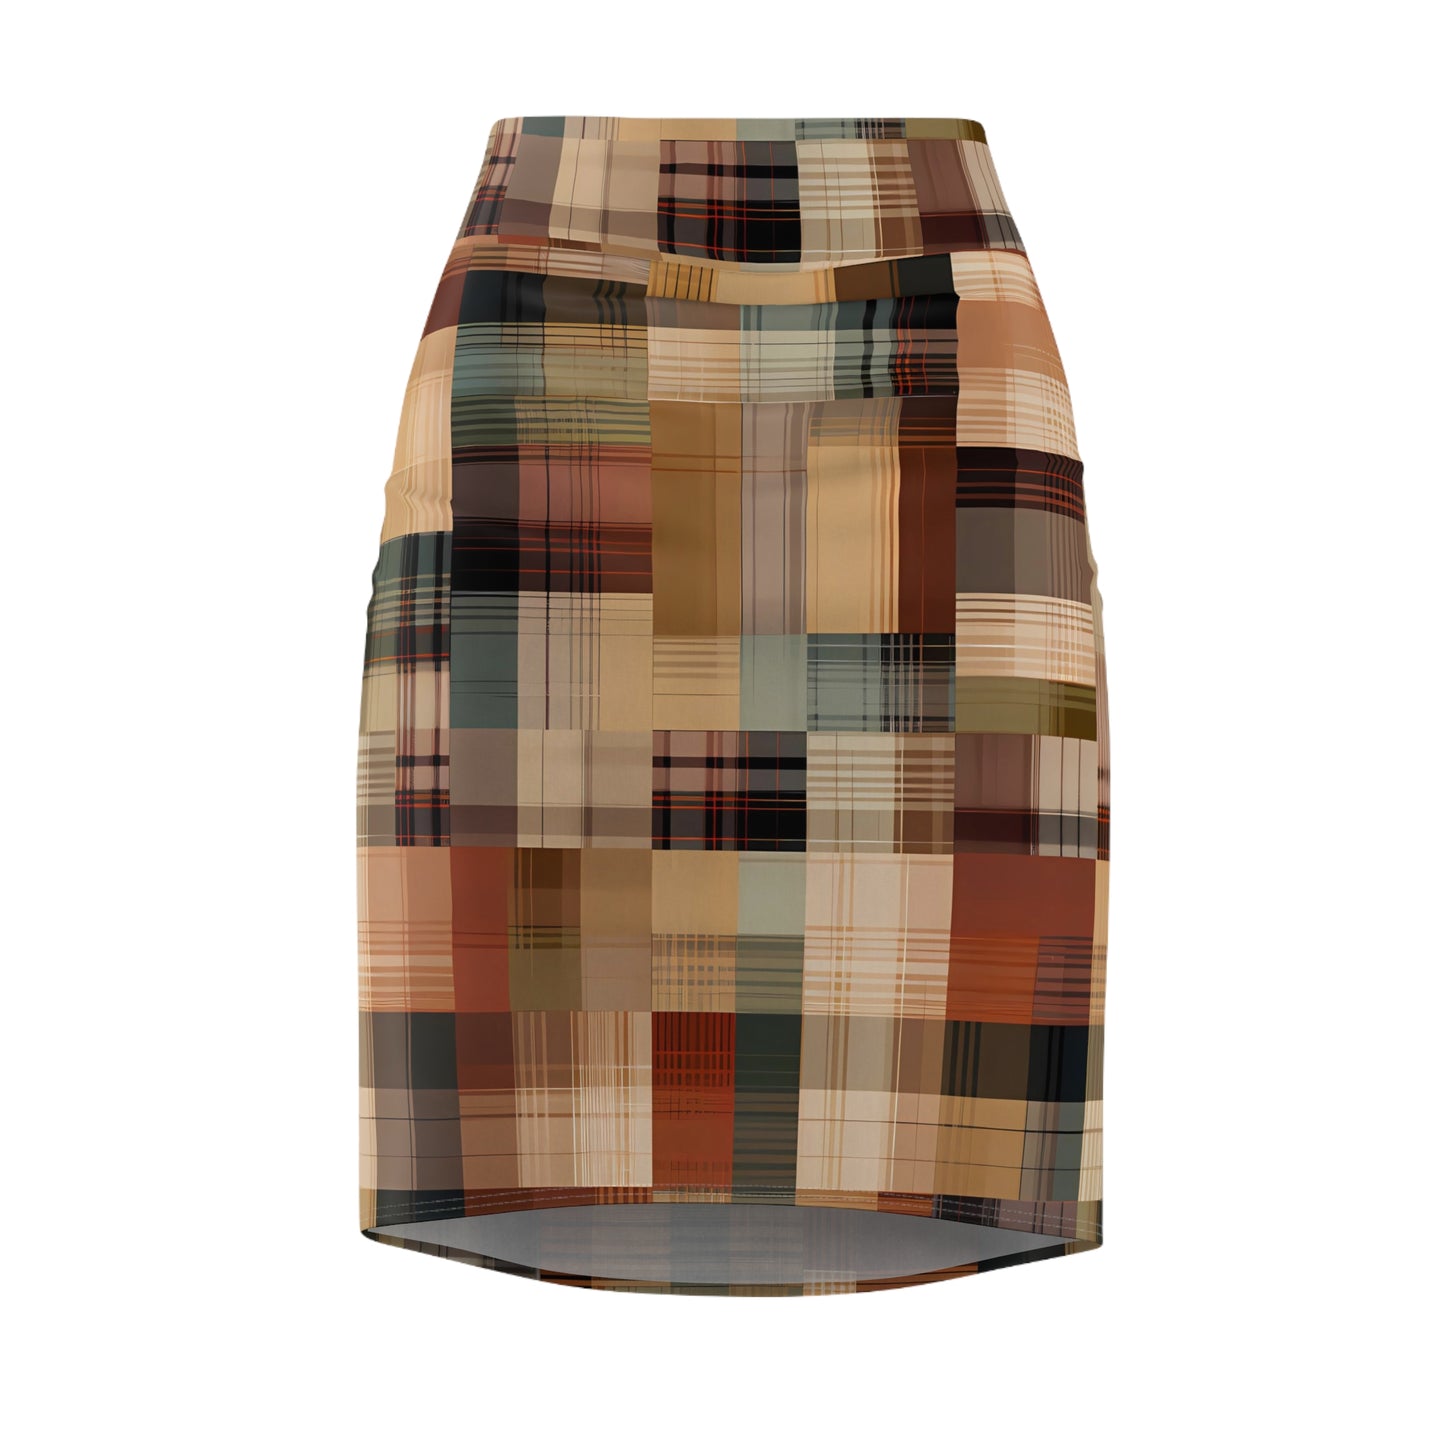 Abstract Plaid Pencil Skirt